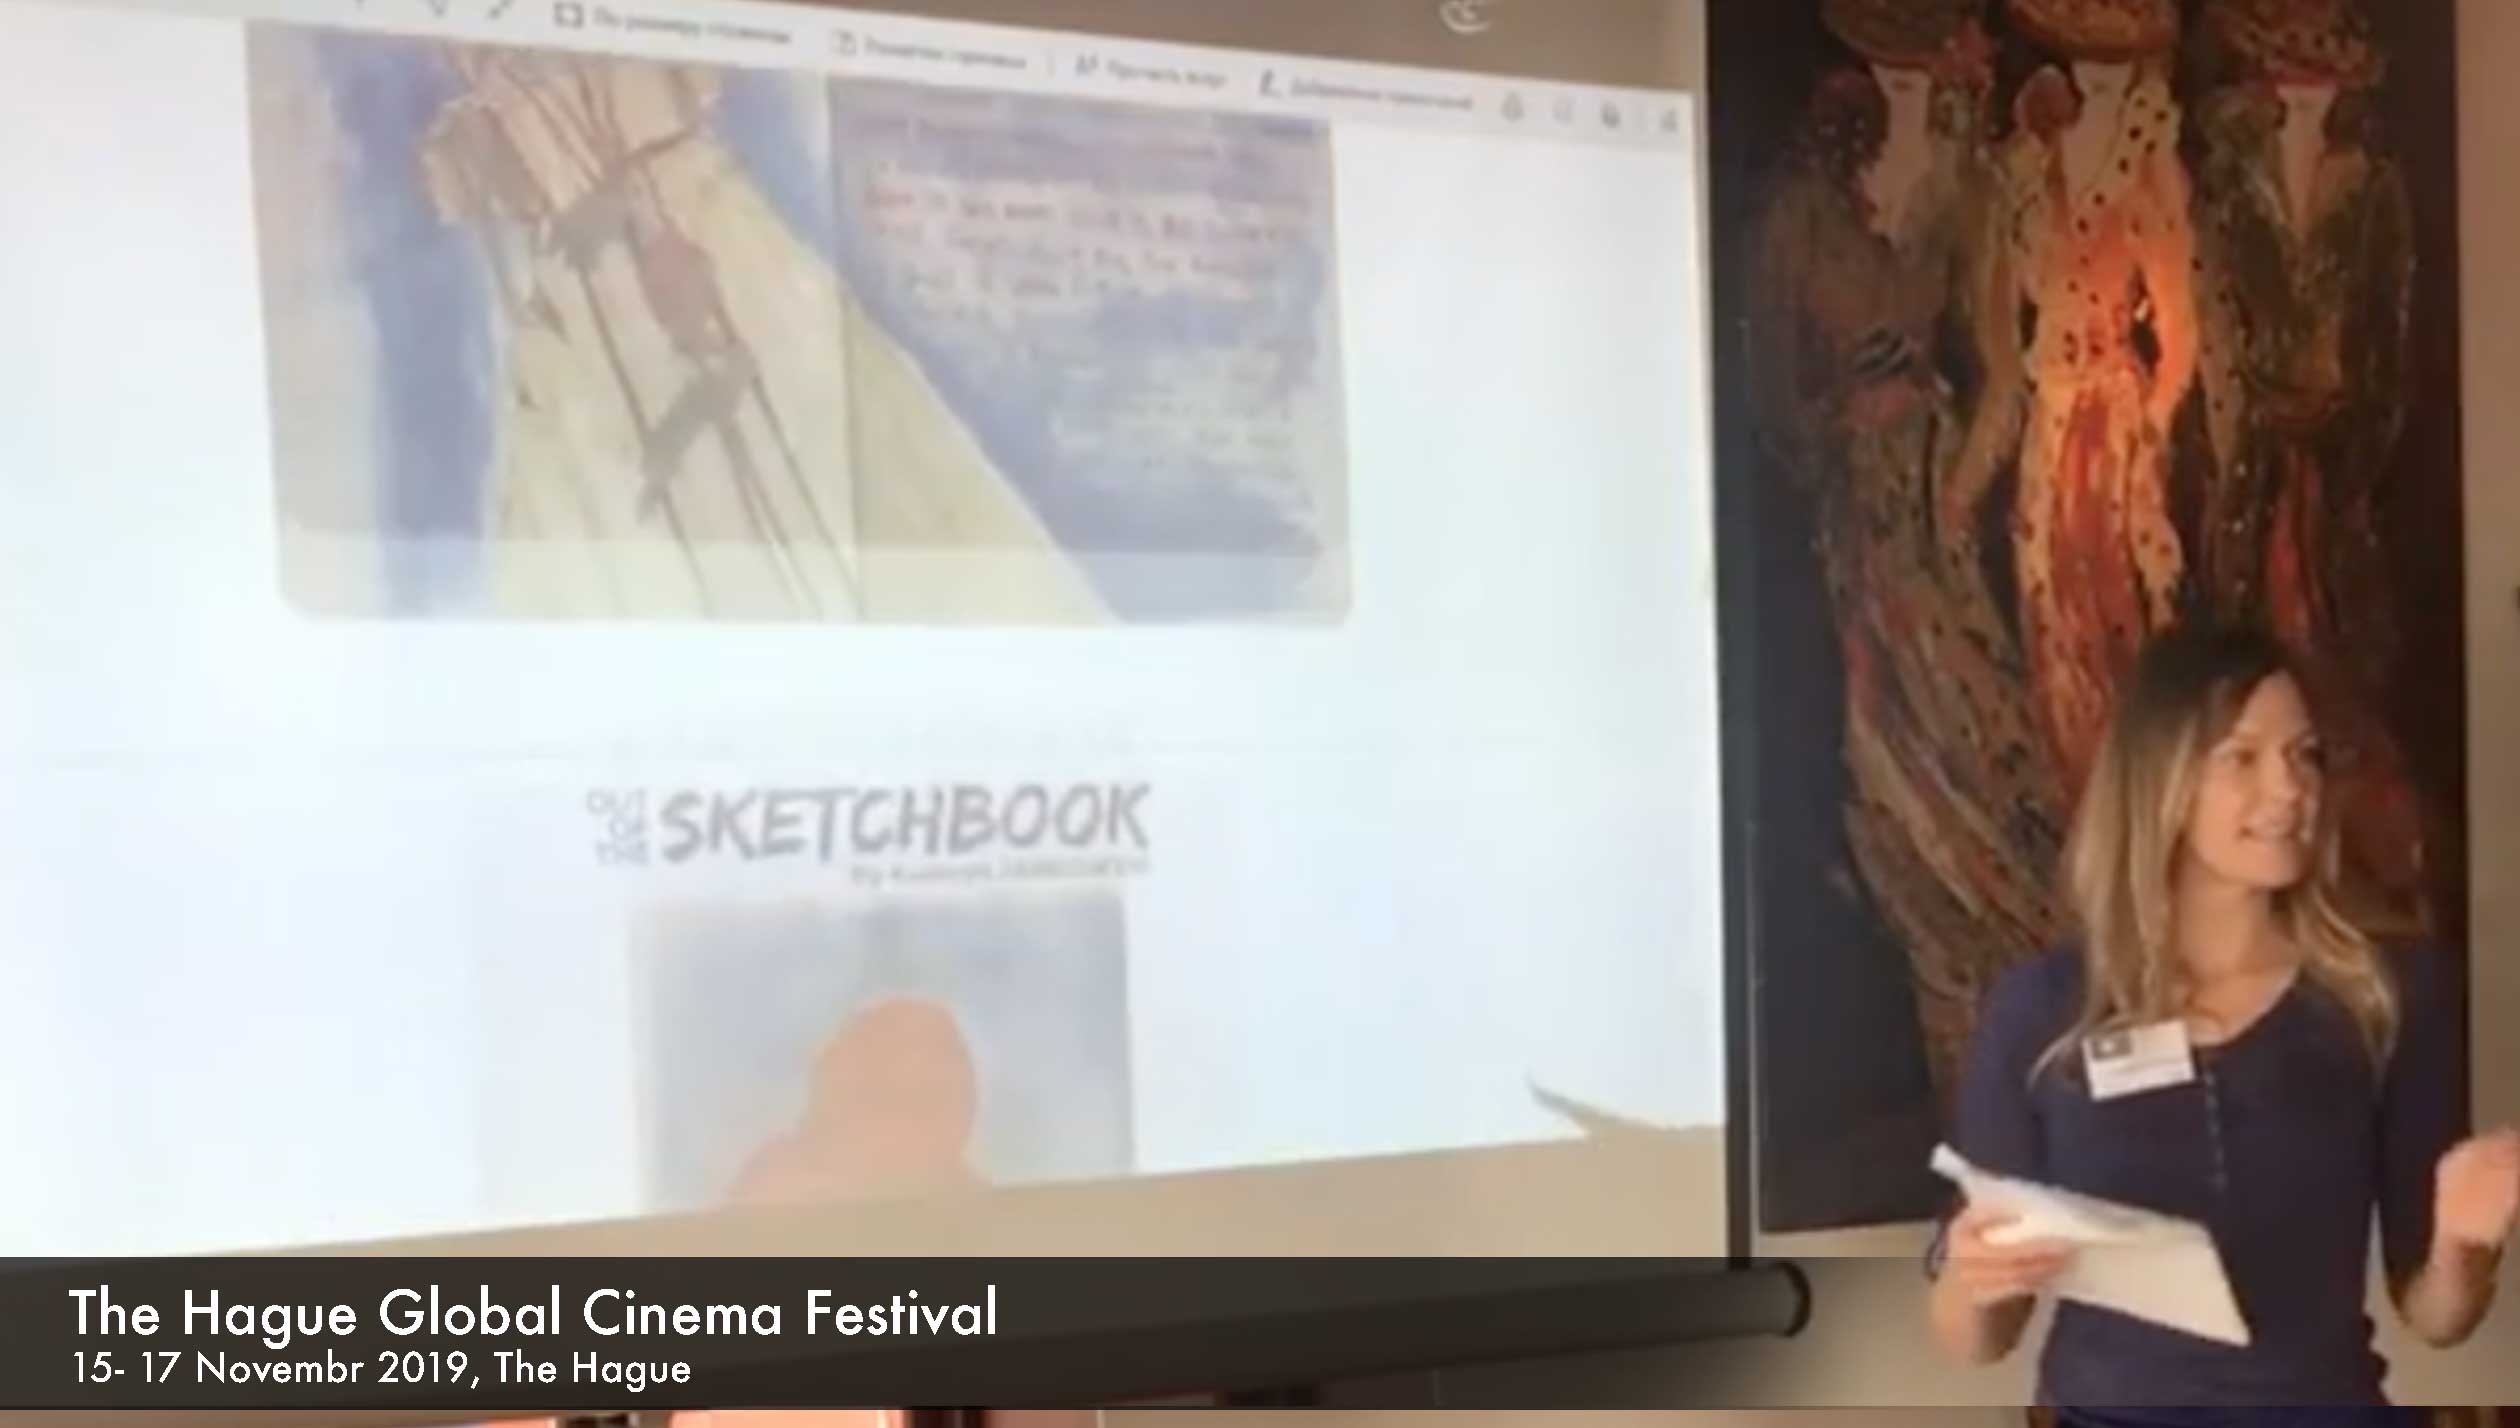 Kathryn Ann Jankowski presenting her artwork including her sketchbooks at The Hague Global Cinema 2019